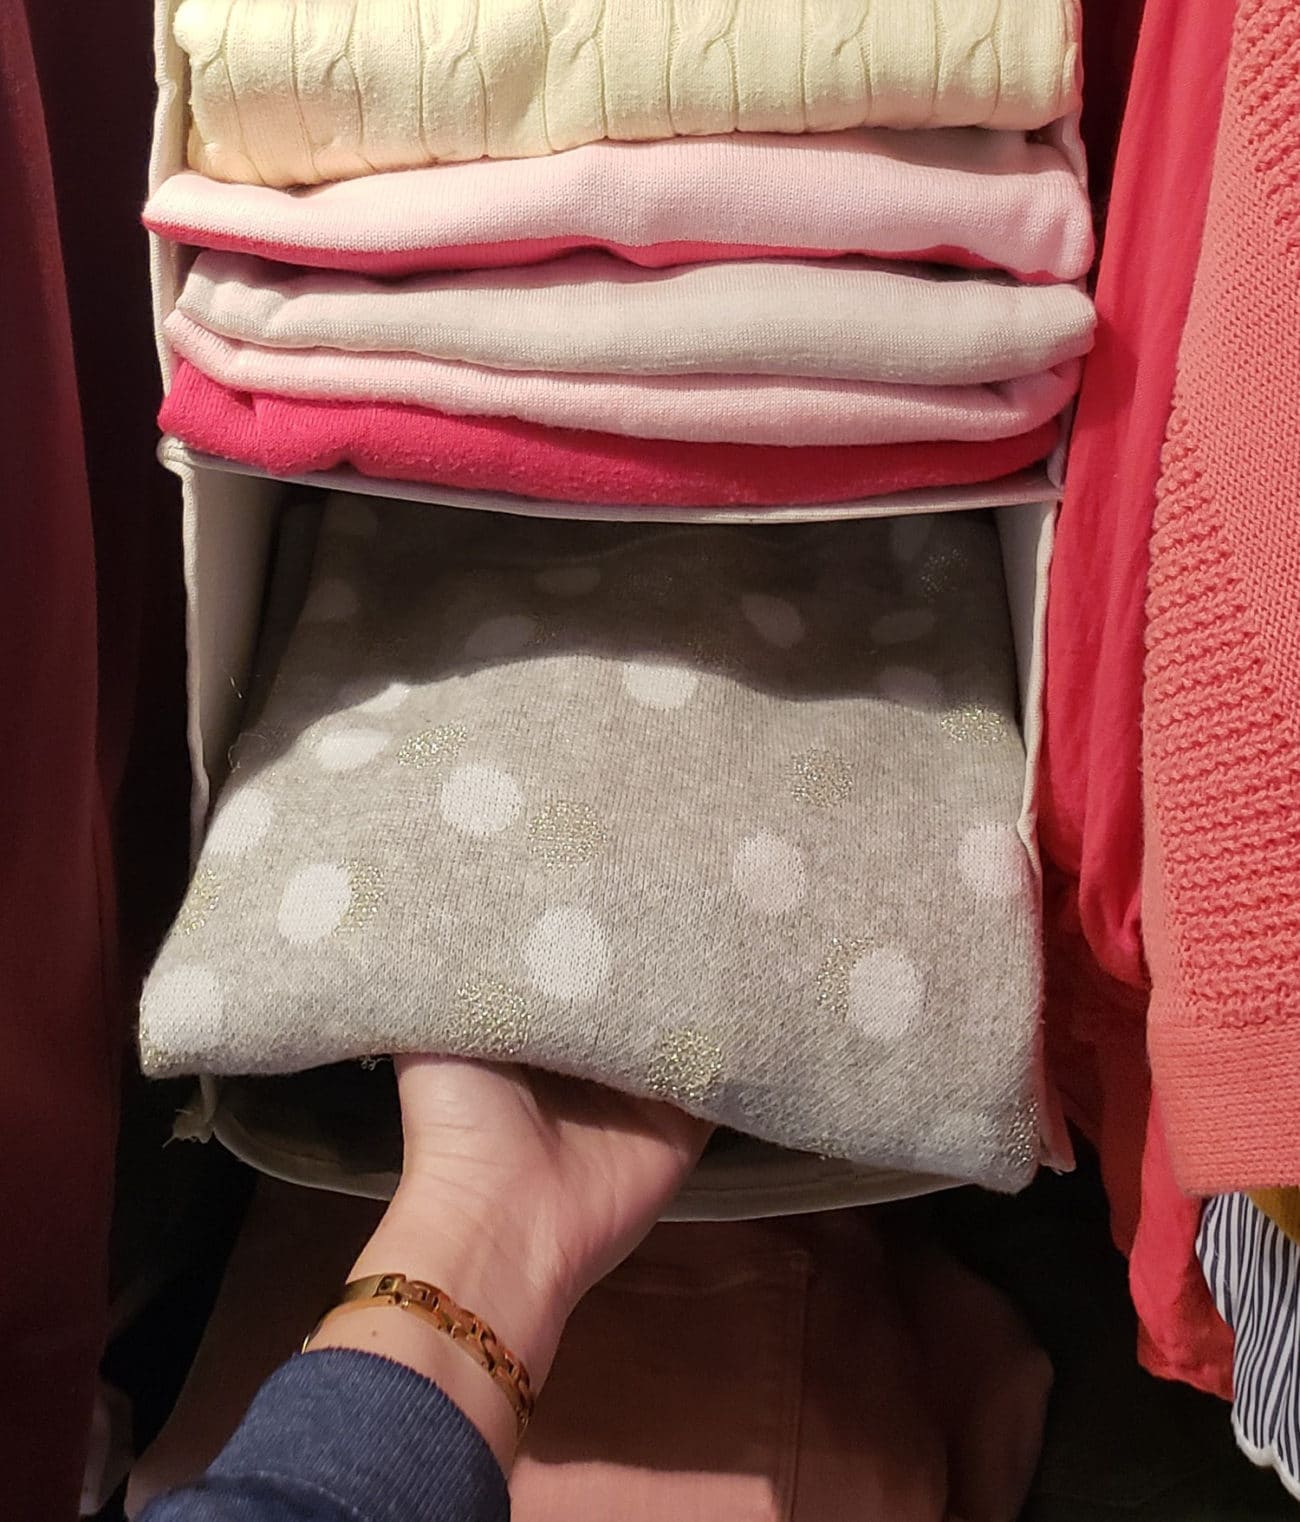 Organized sweaters in a closet